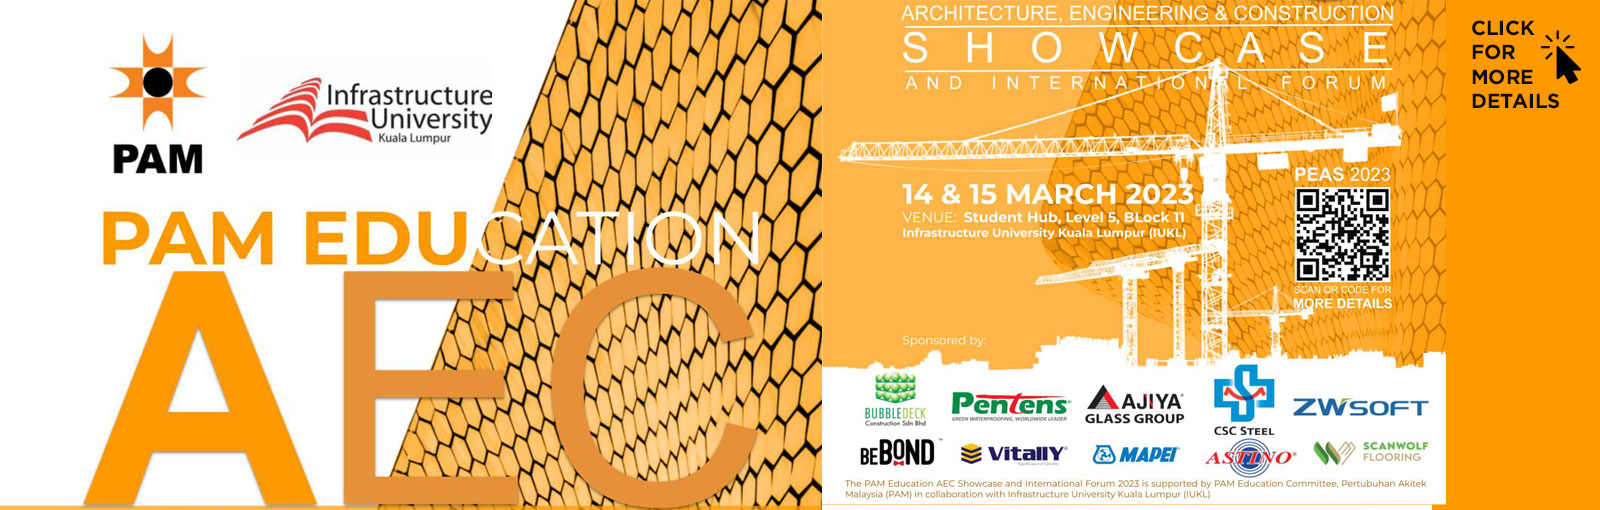 PAM Education (Architecture, Engineering & Construction) Showcase And International Forum